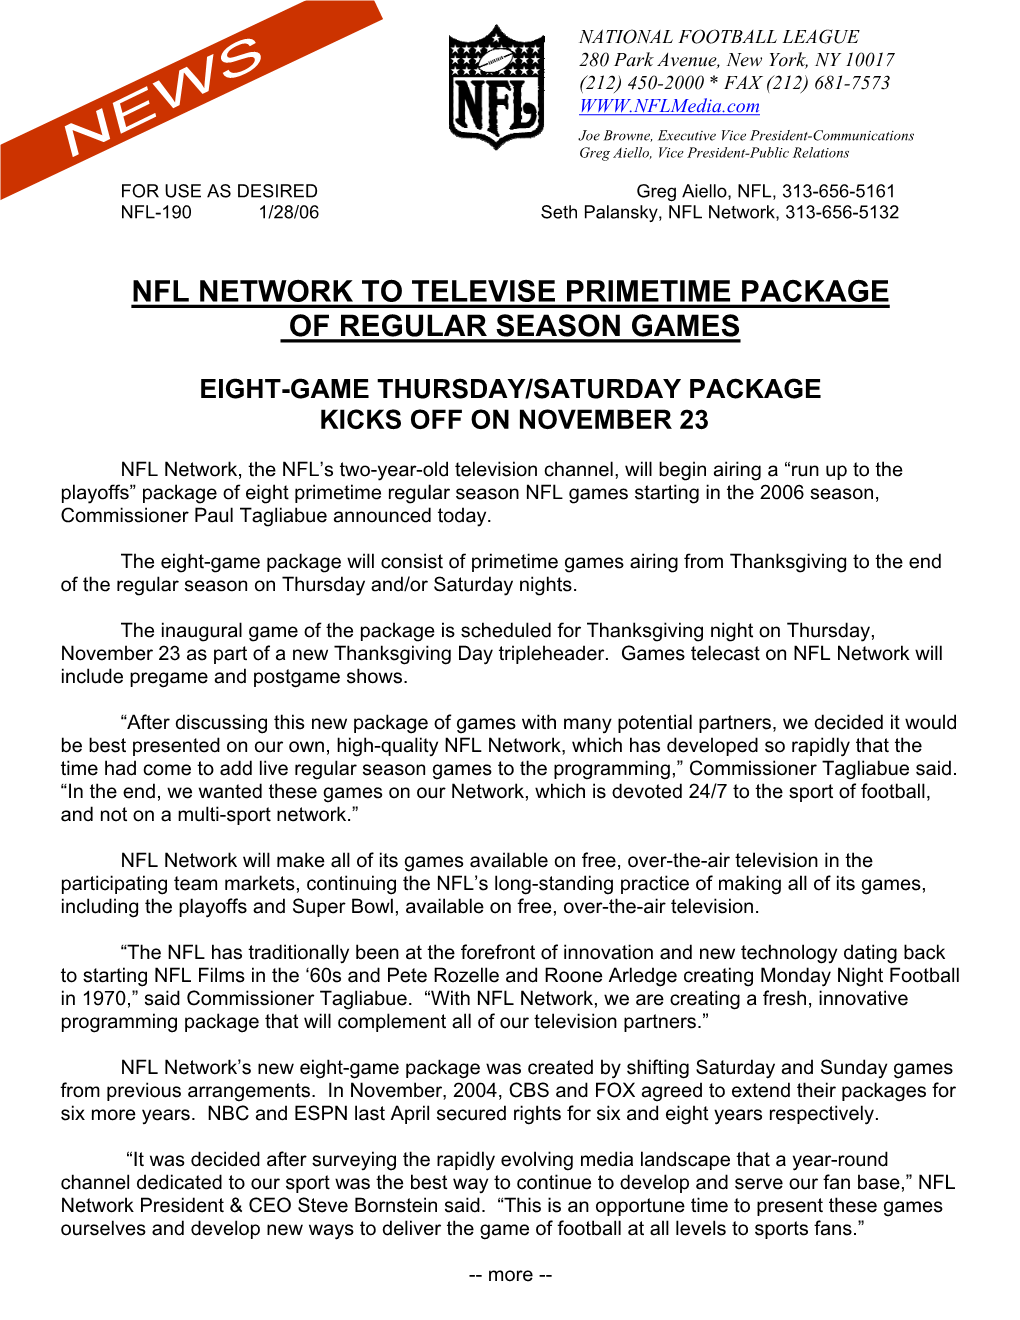 Nfl Network to Televise Primetime Package of Regular Season Games